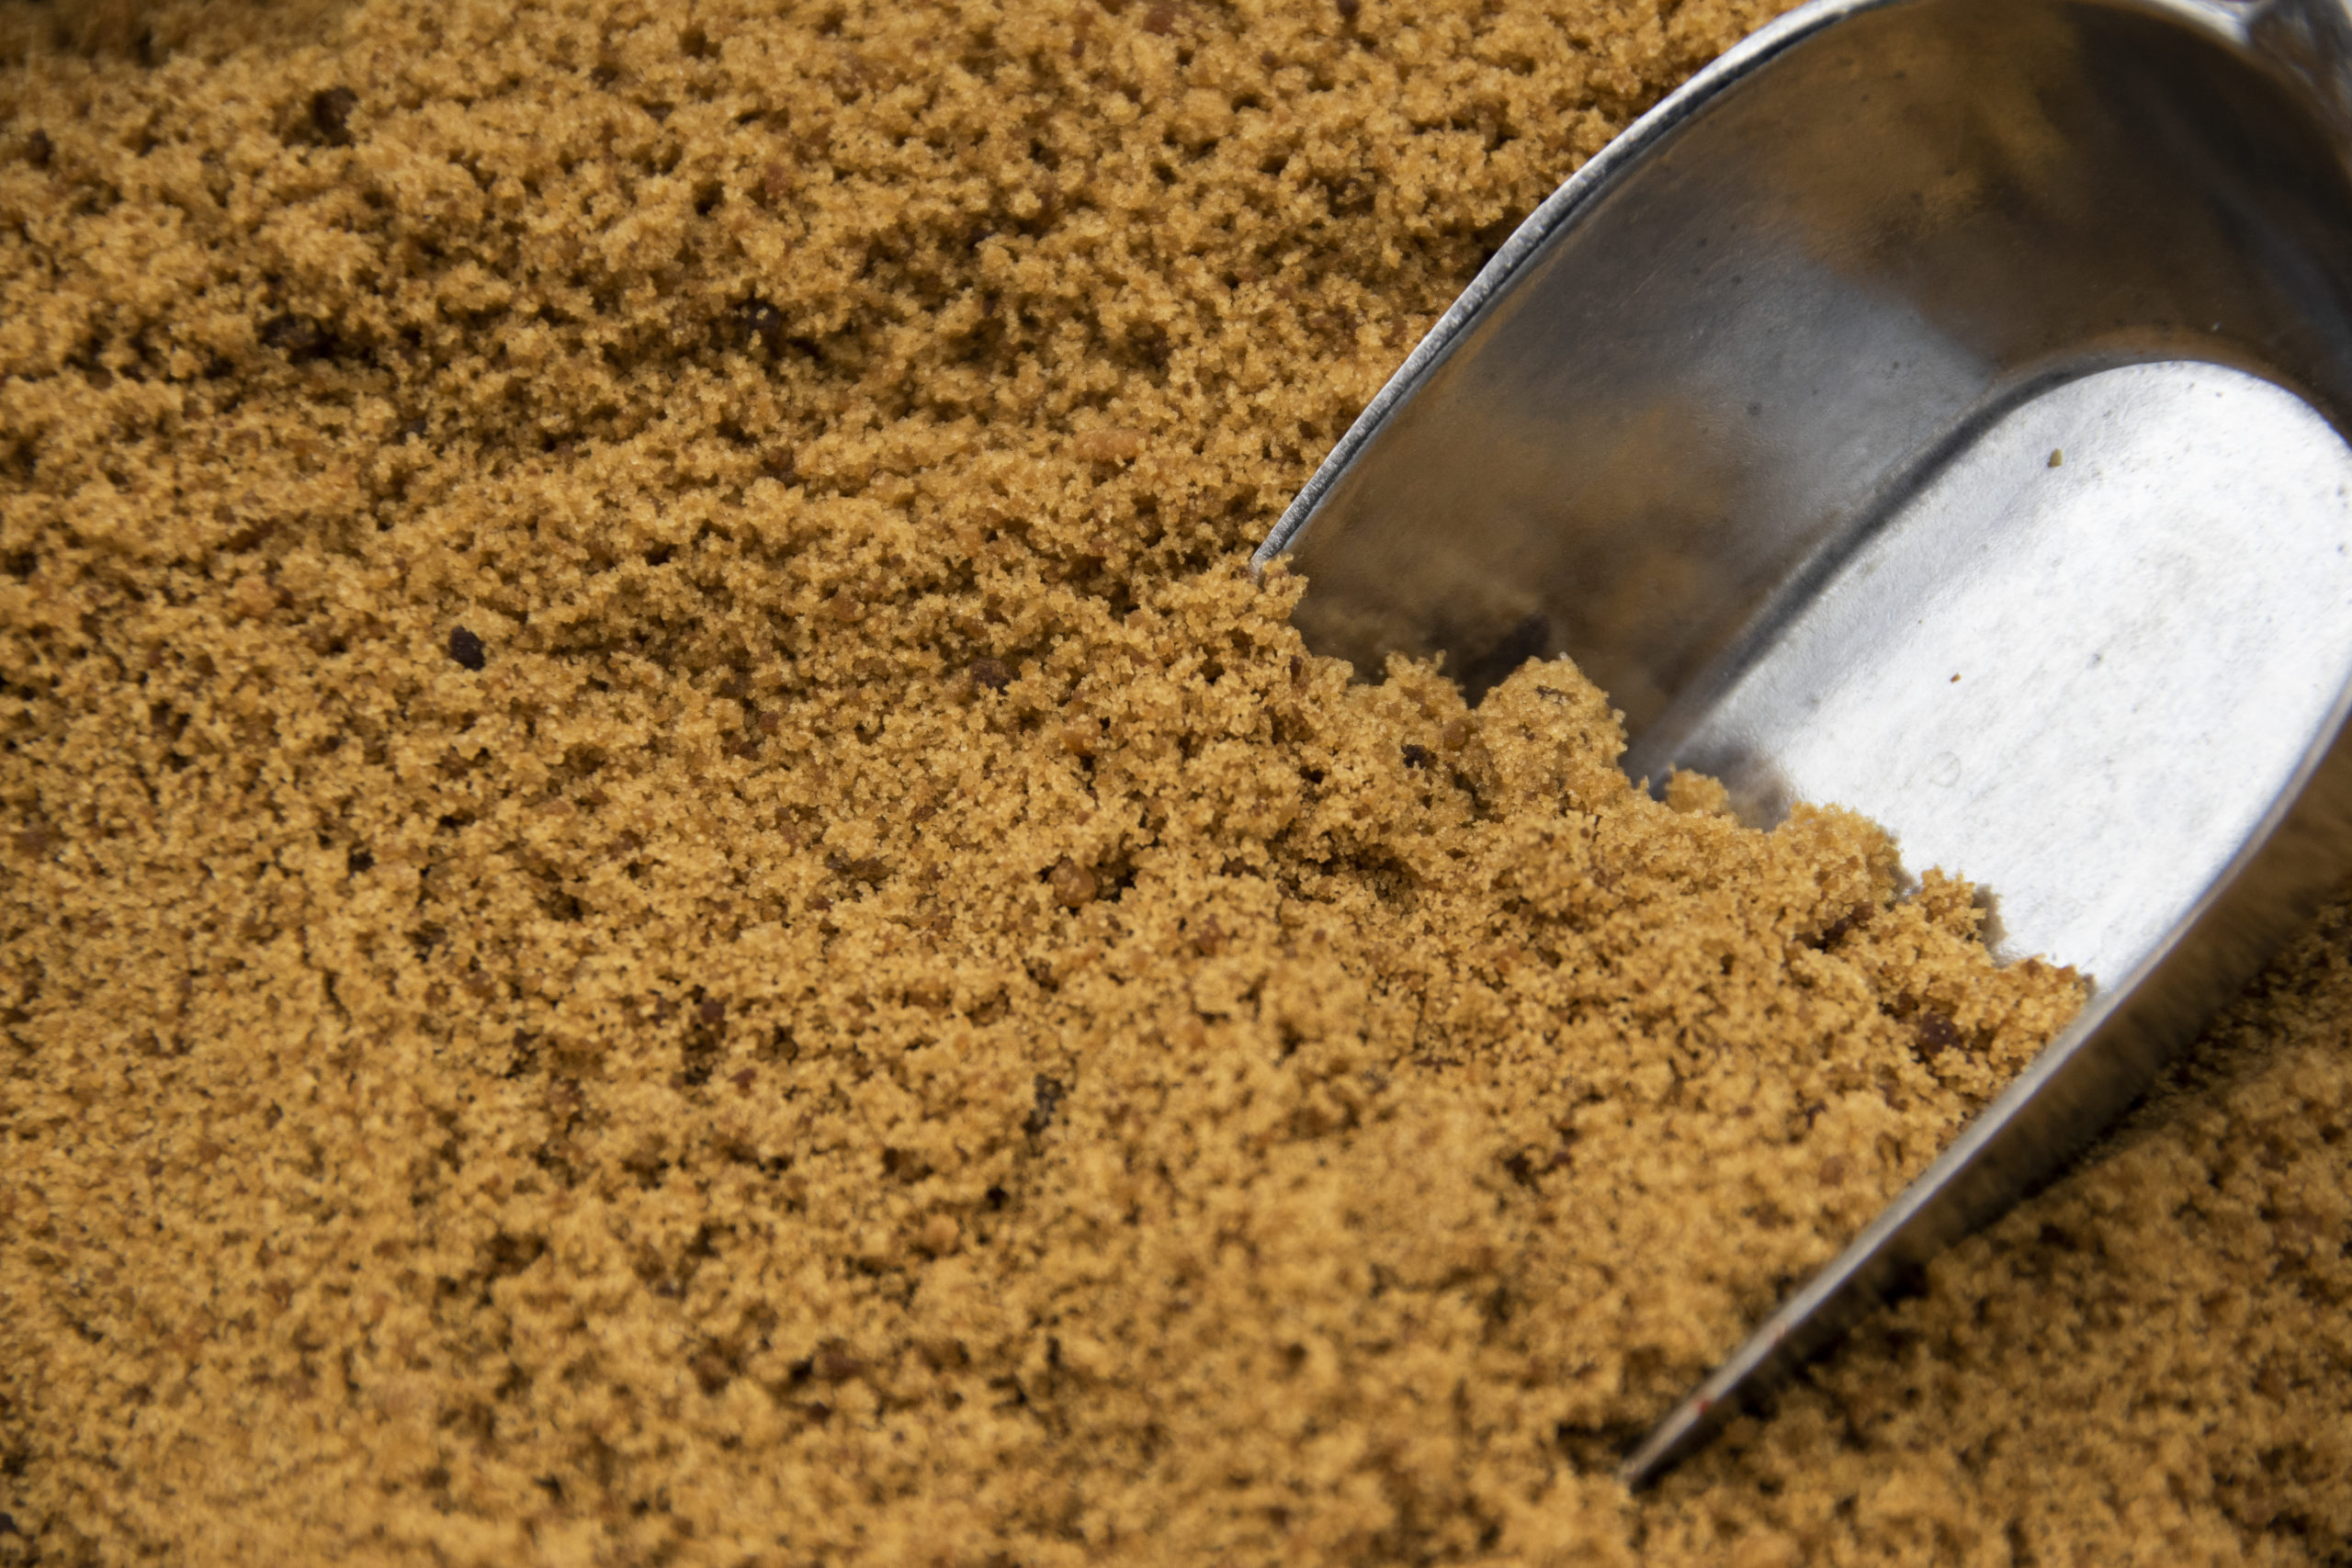 sucre complet brut Bio & Equitable - Panela